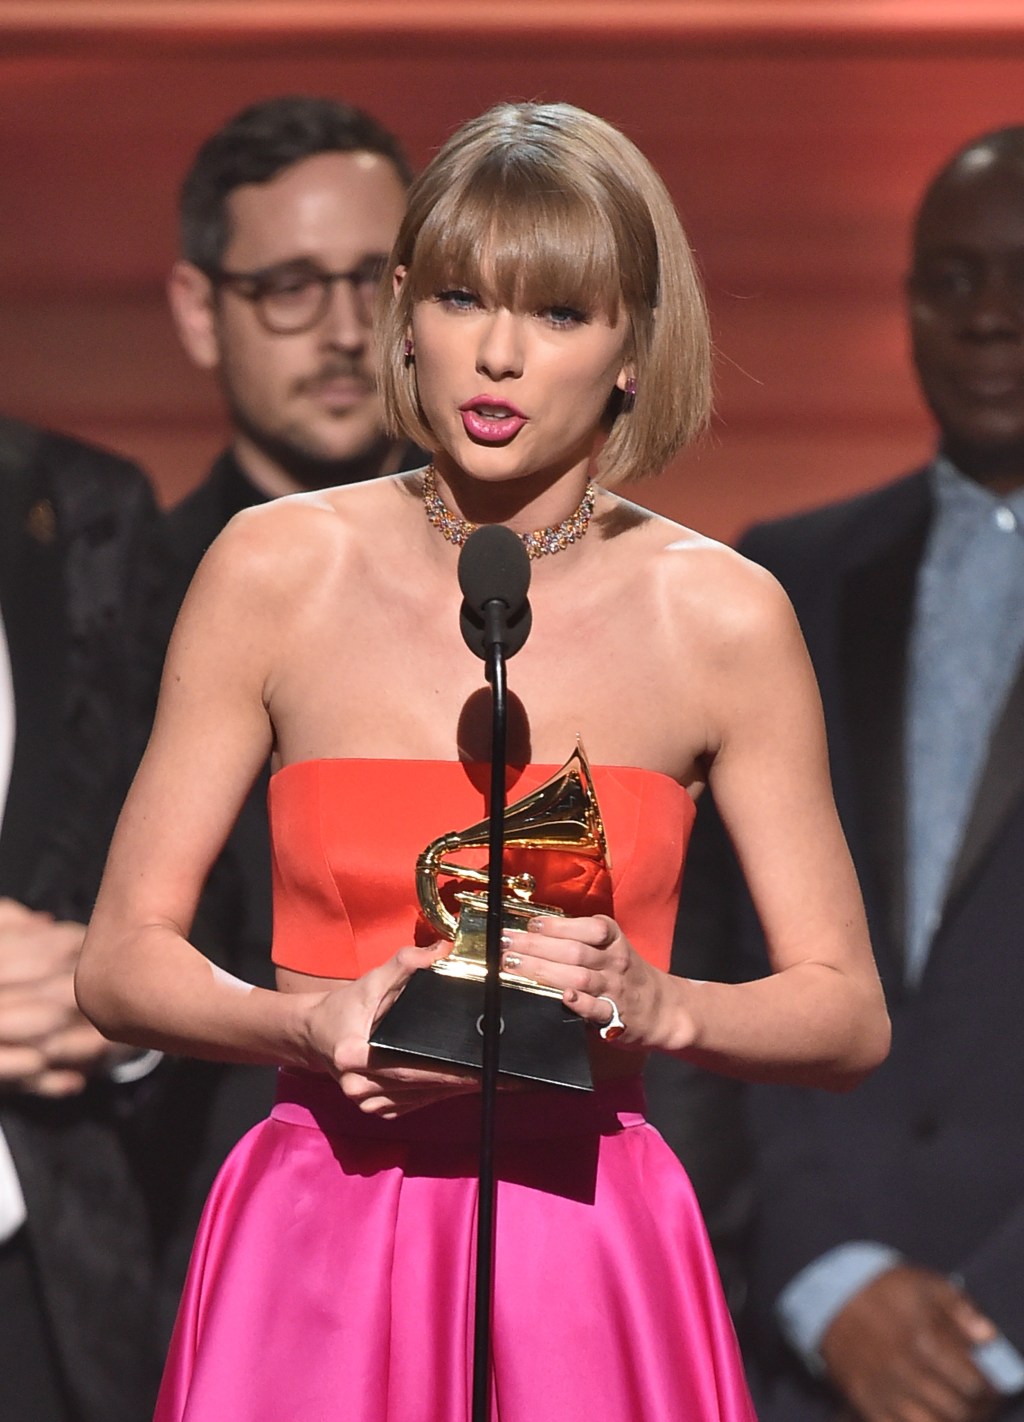 Taylor Swift Shades Kanye In Grammys Acceptance Speech 106.7 WTLC